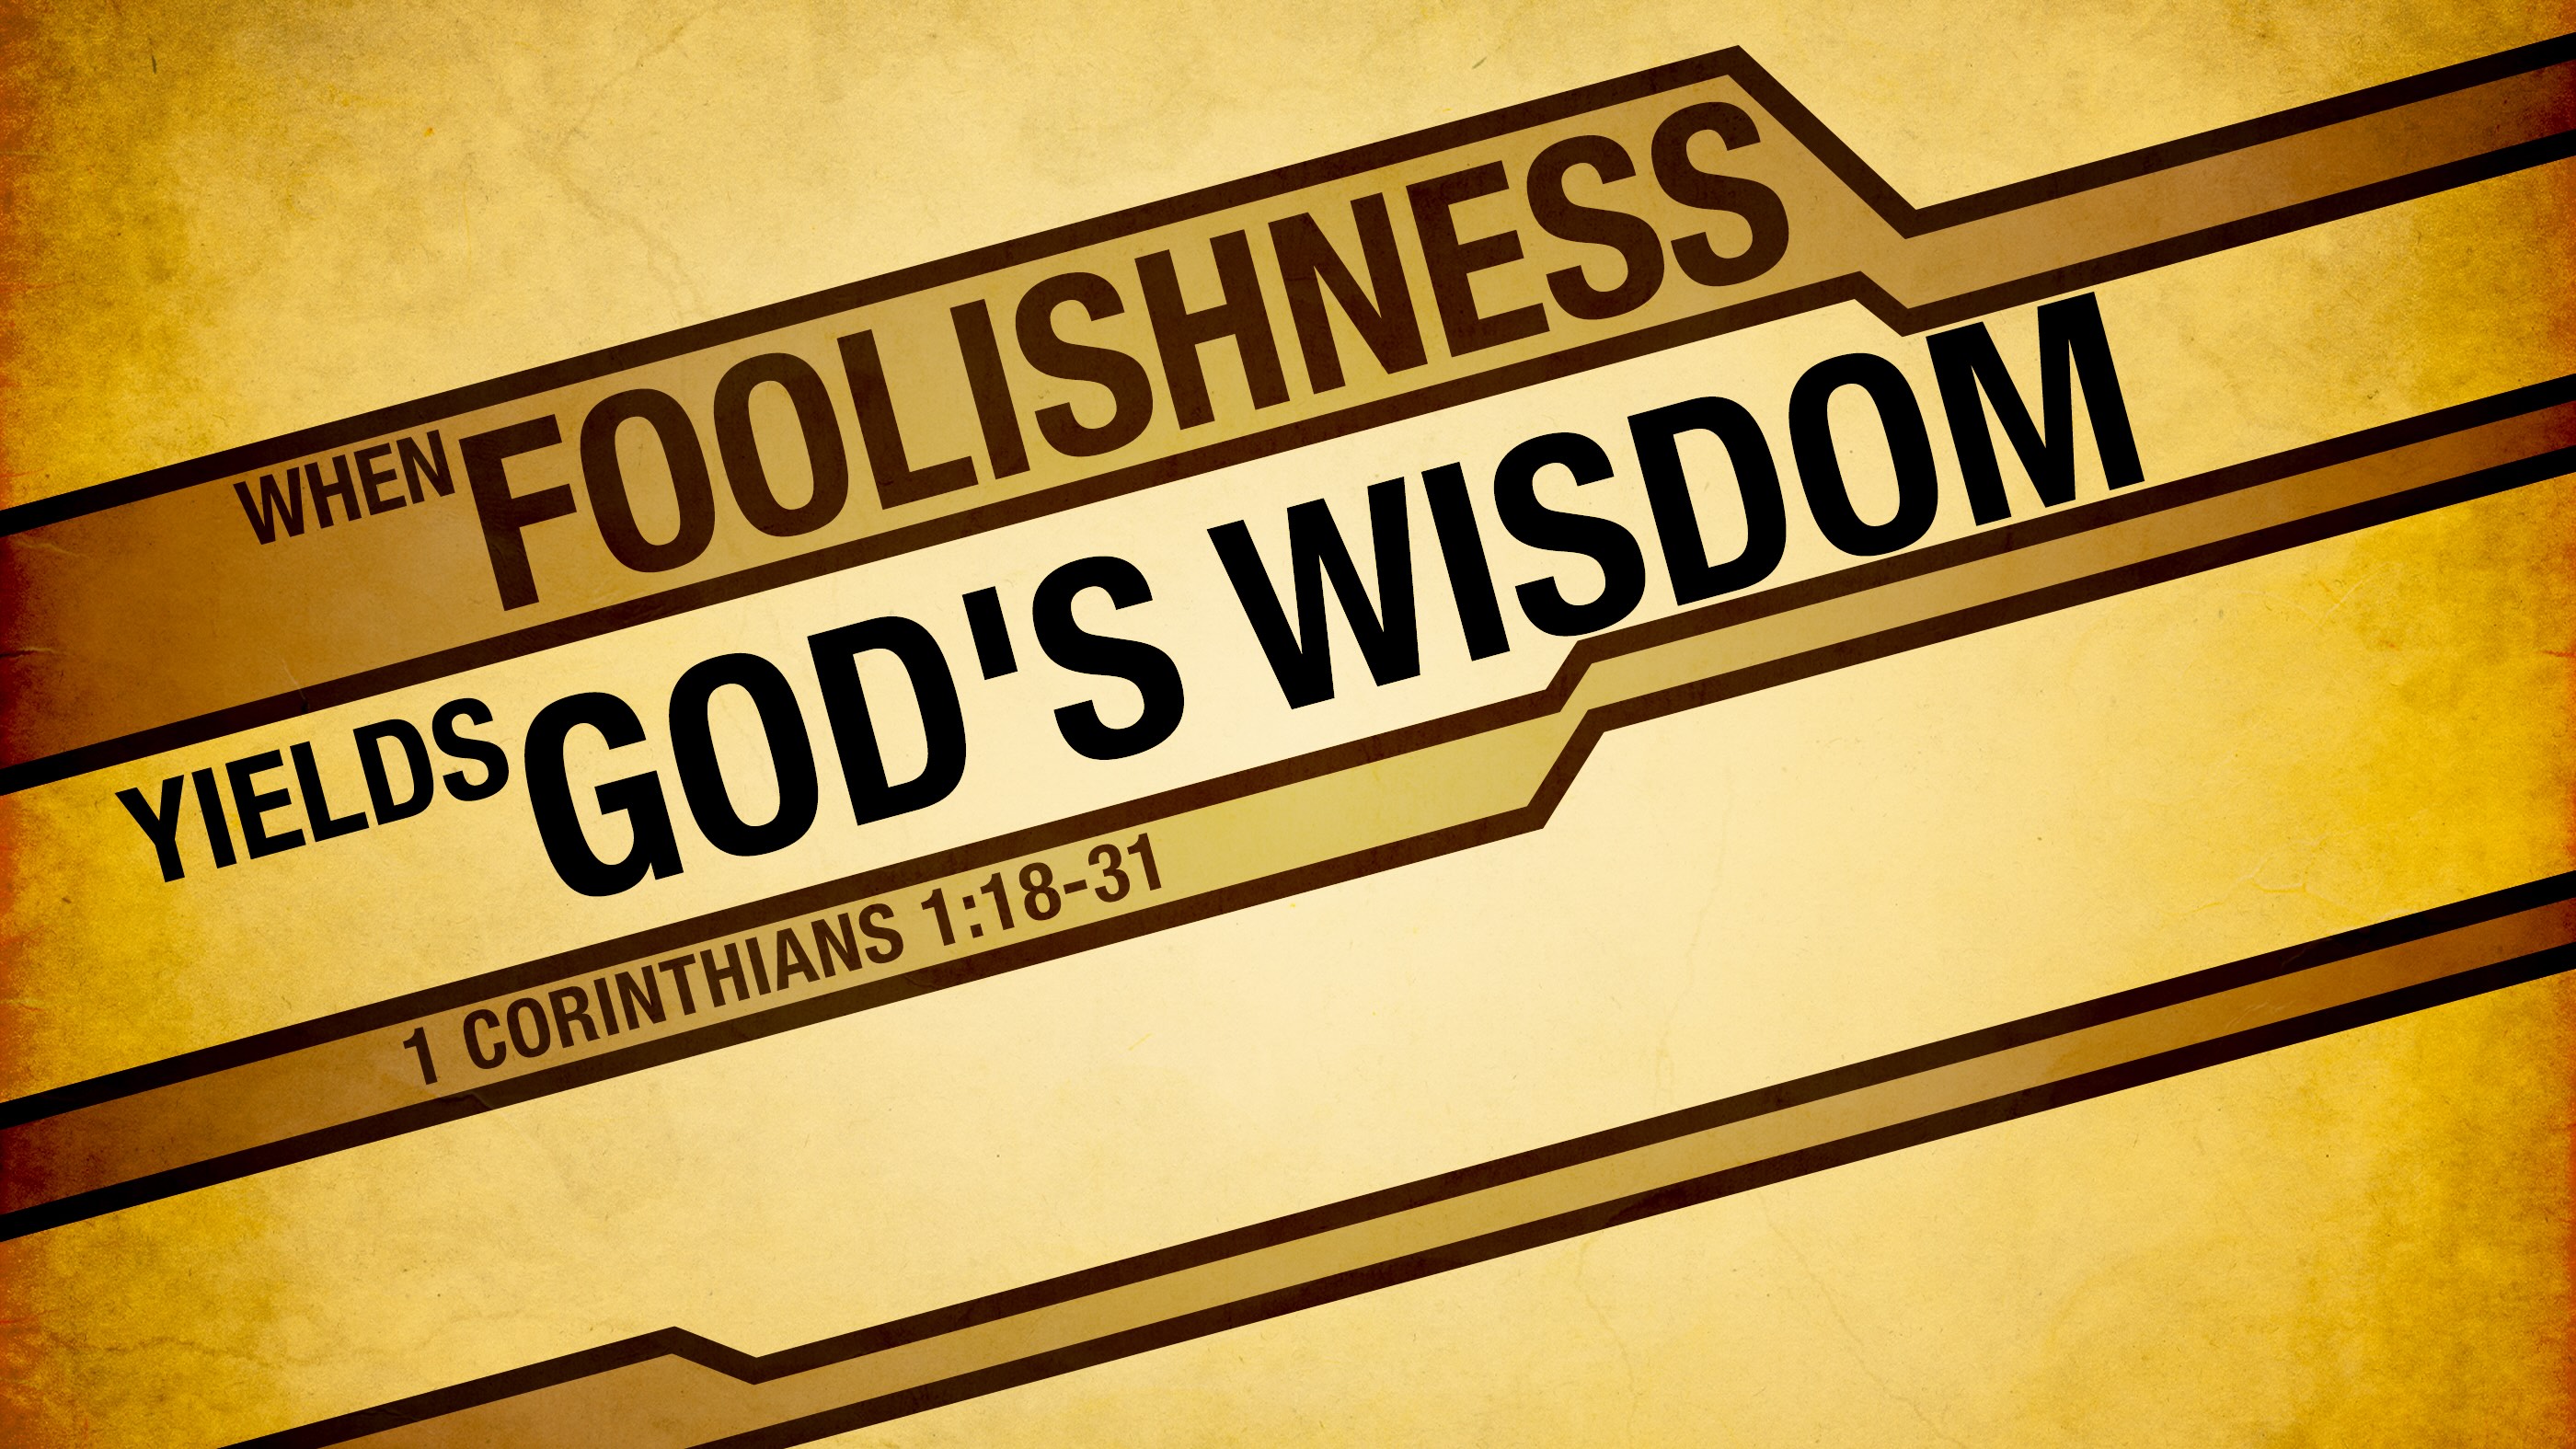 When Our Foolishness Yields God's Wisdom